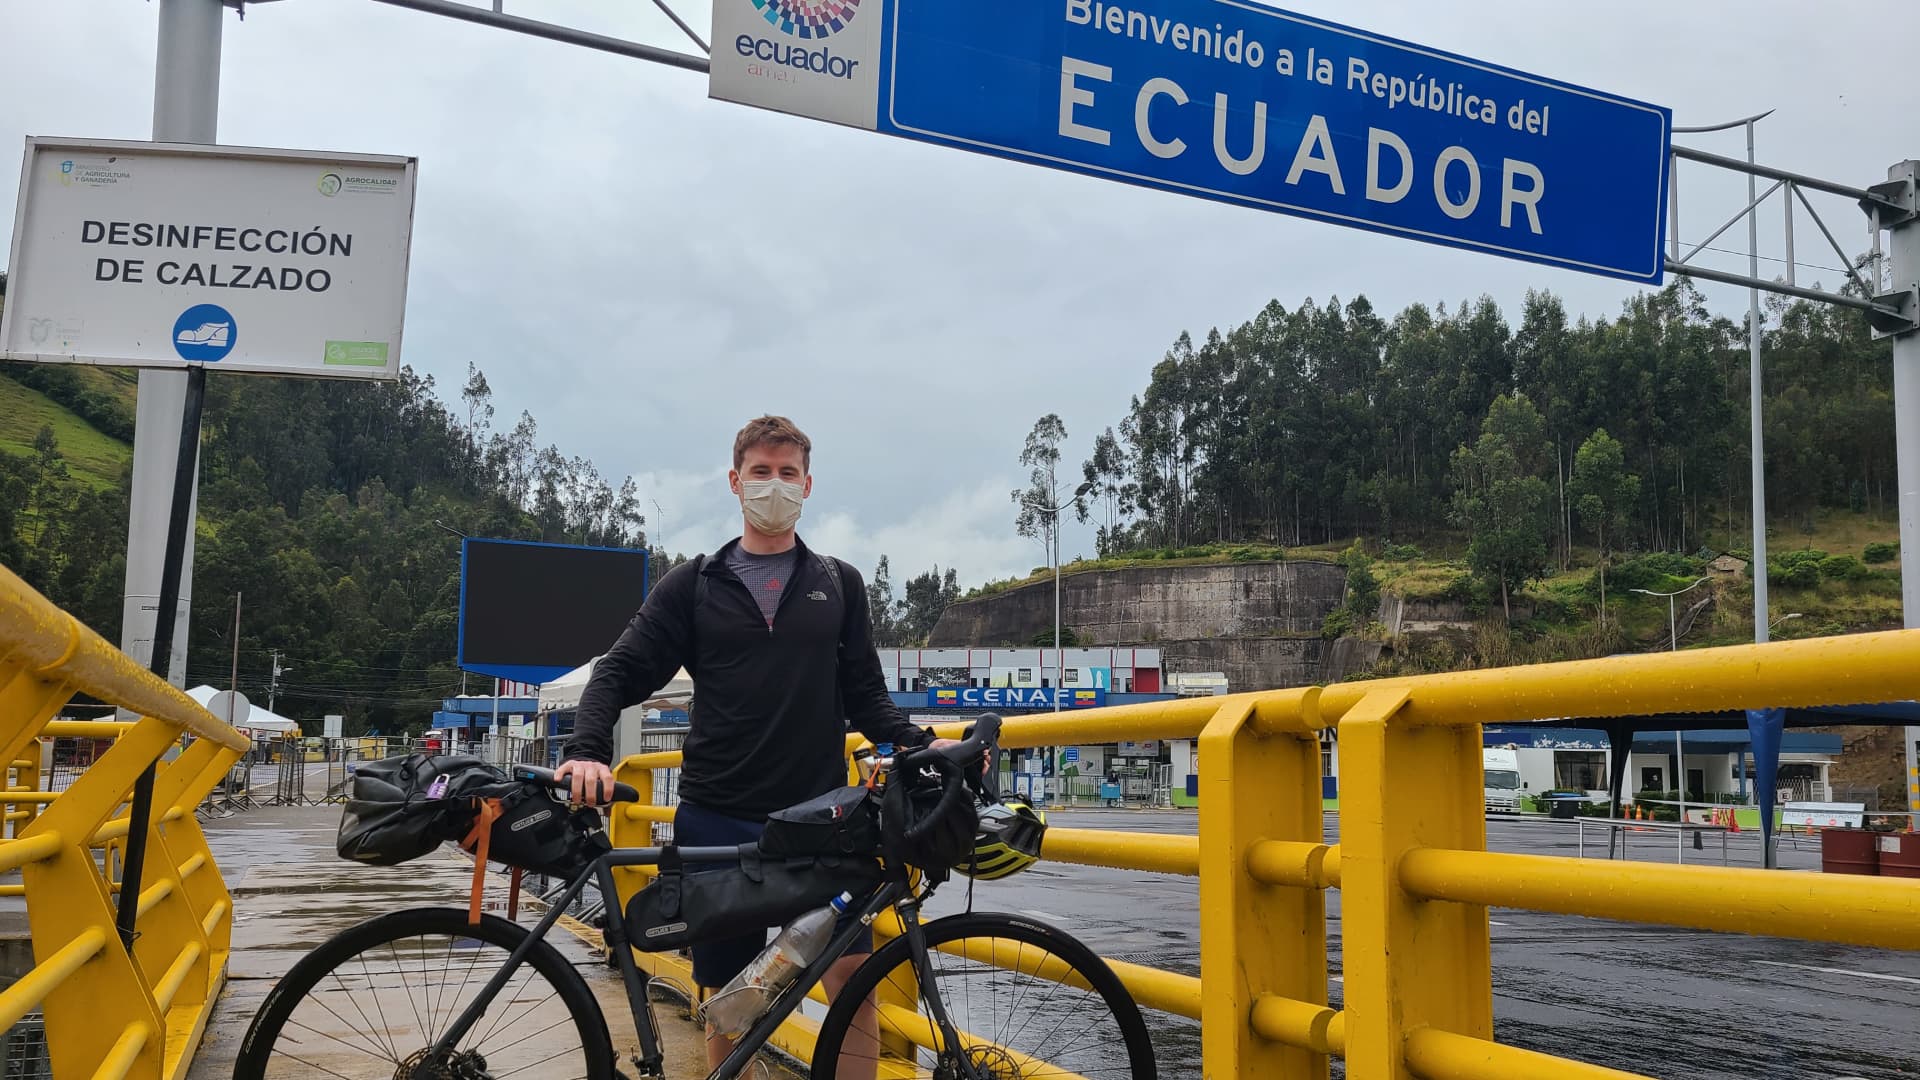 Andrew reaches Ecuador